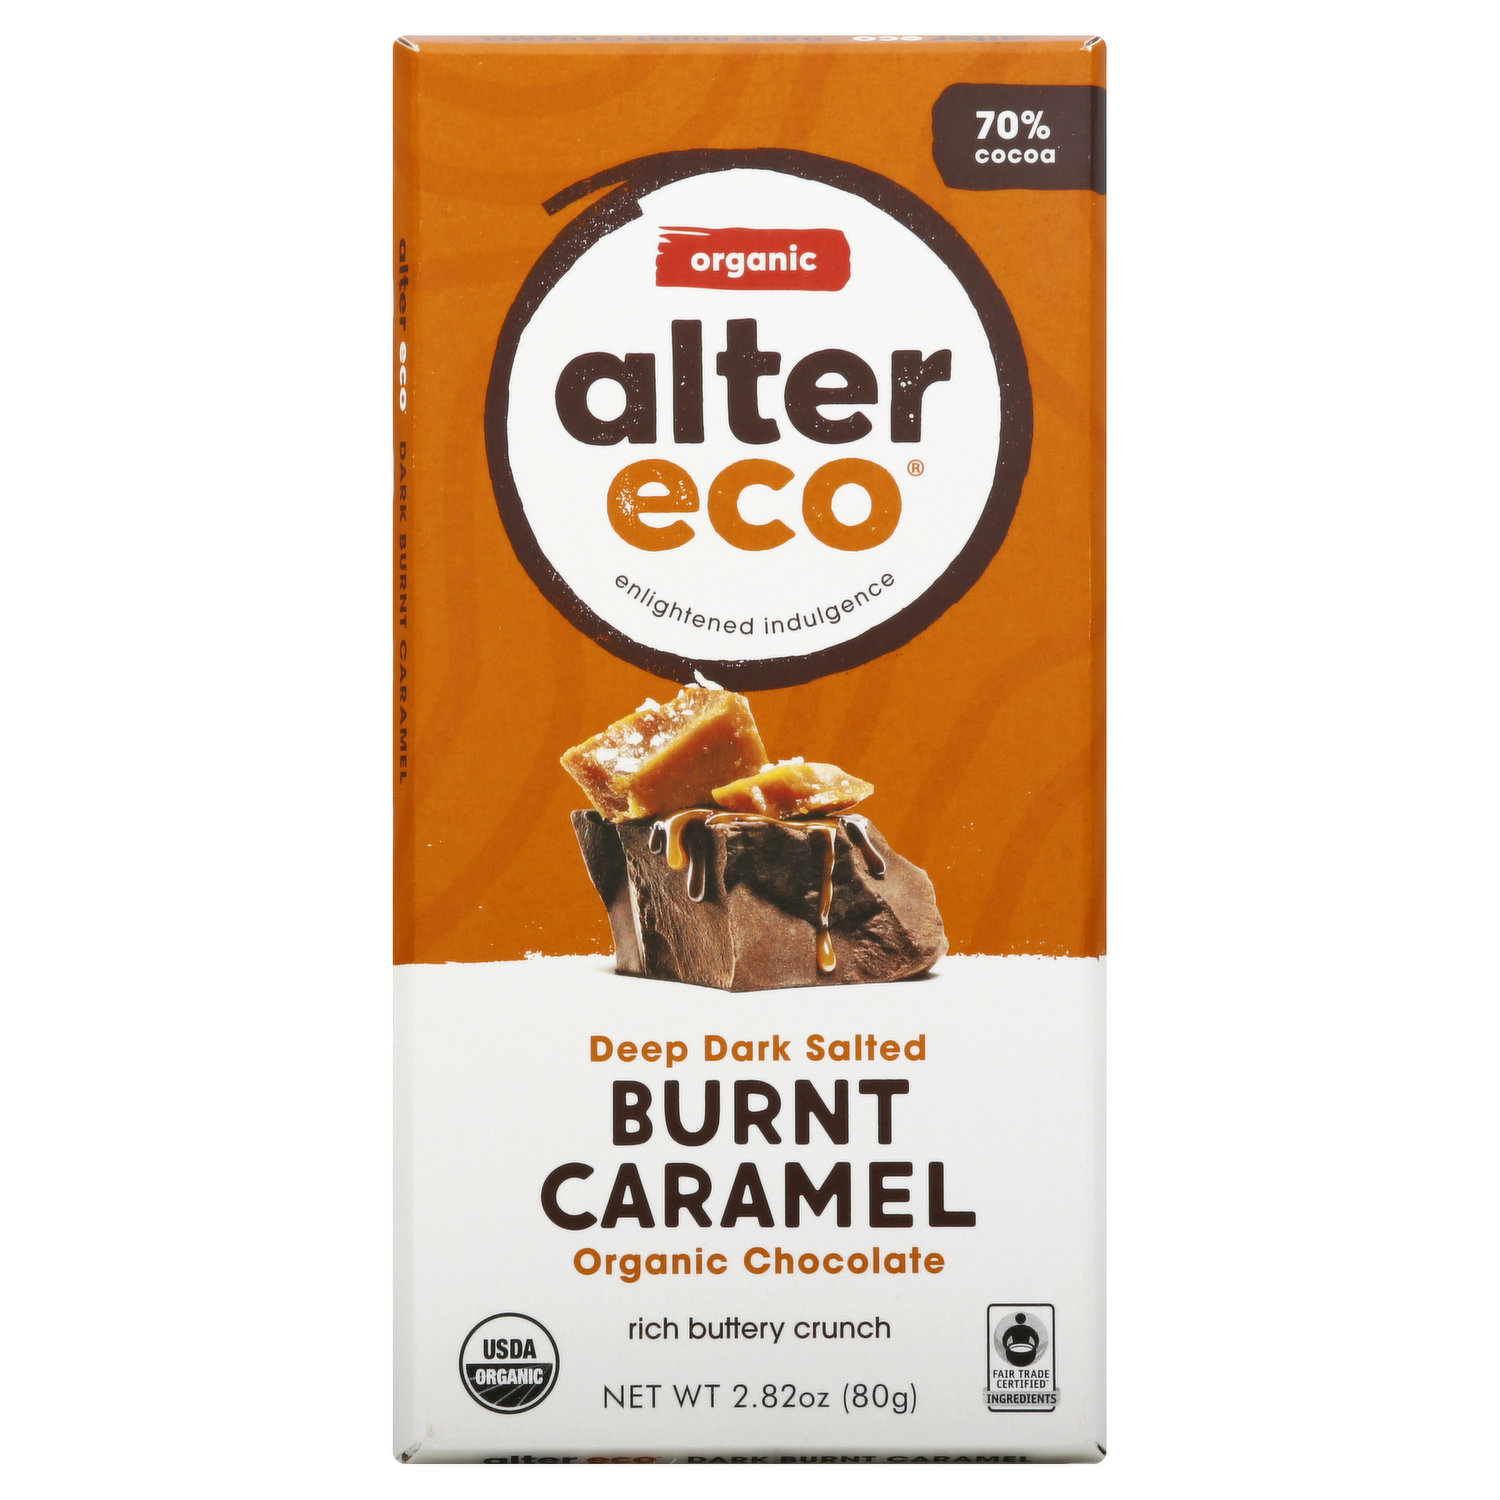 Alter Eco Truffles Dark Chocolate Caramel